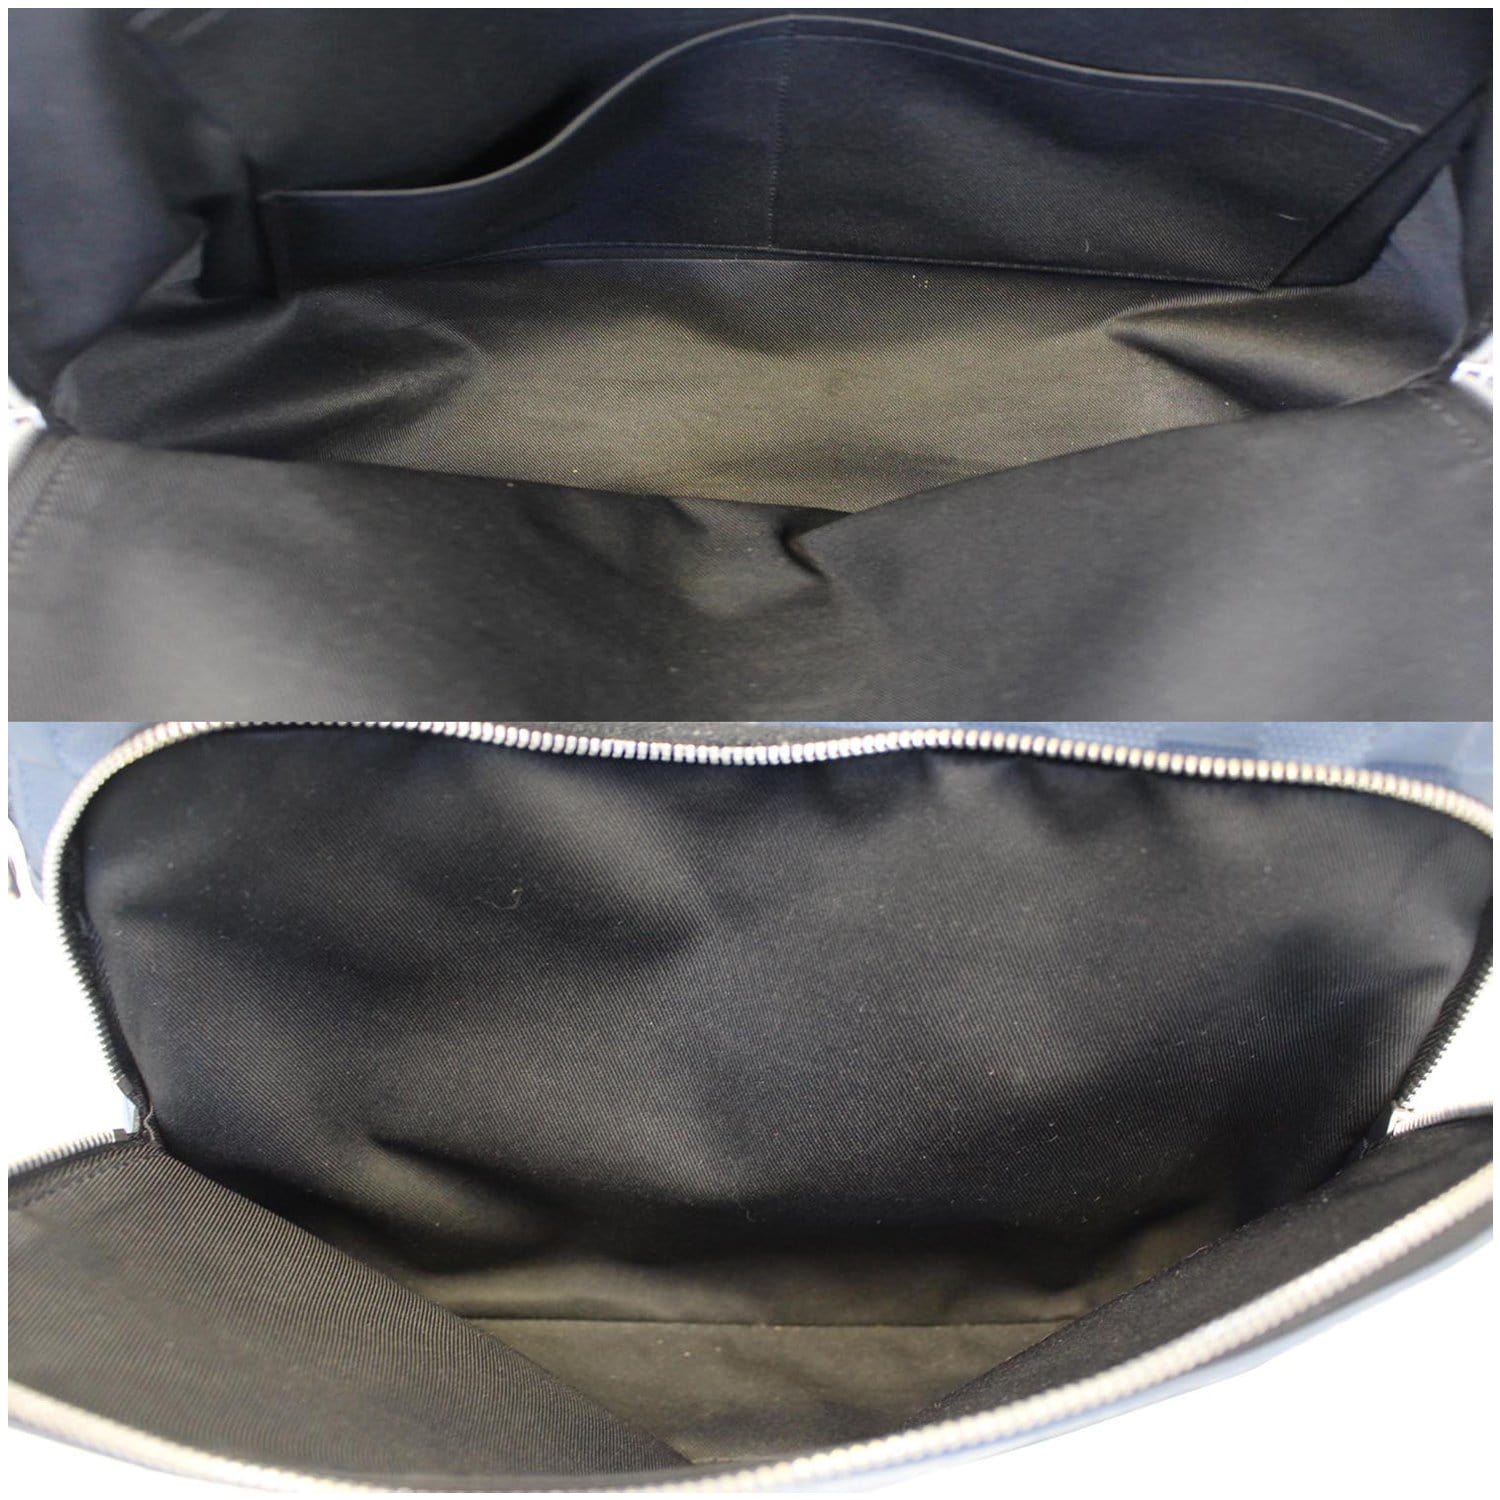 Louis Vuitton Avenue Damier Infini Leather Backpack Bag